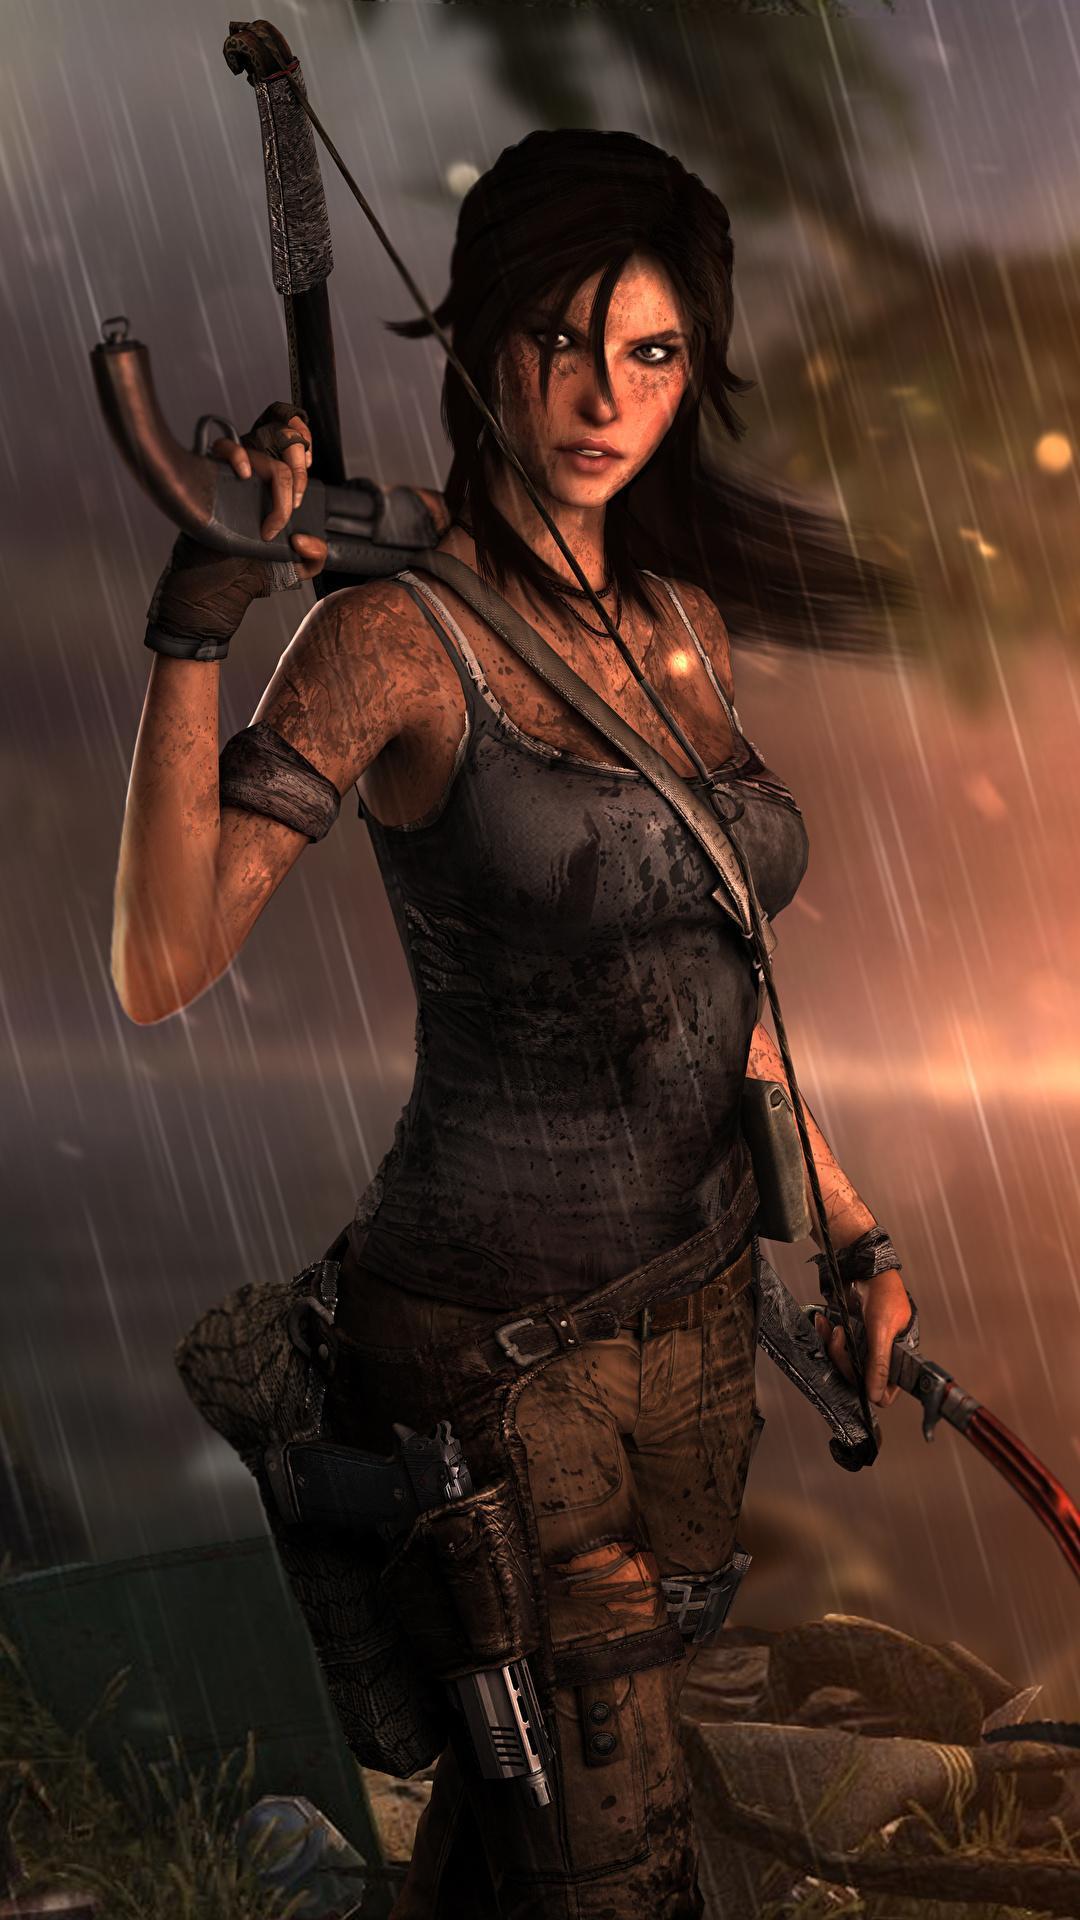 Lara Croft wallpaper for Android